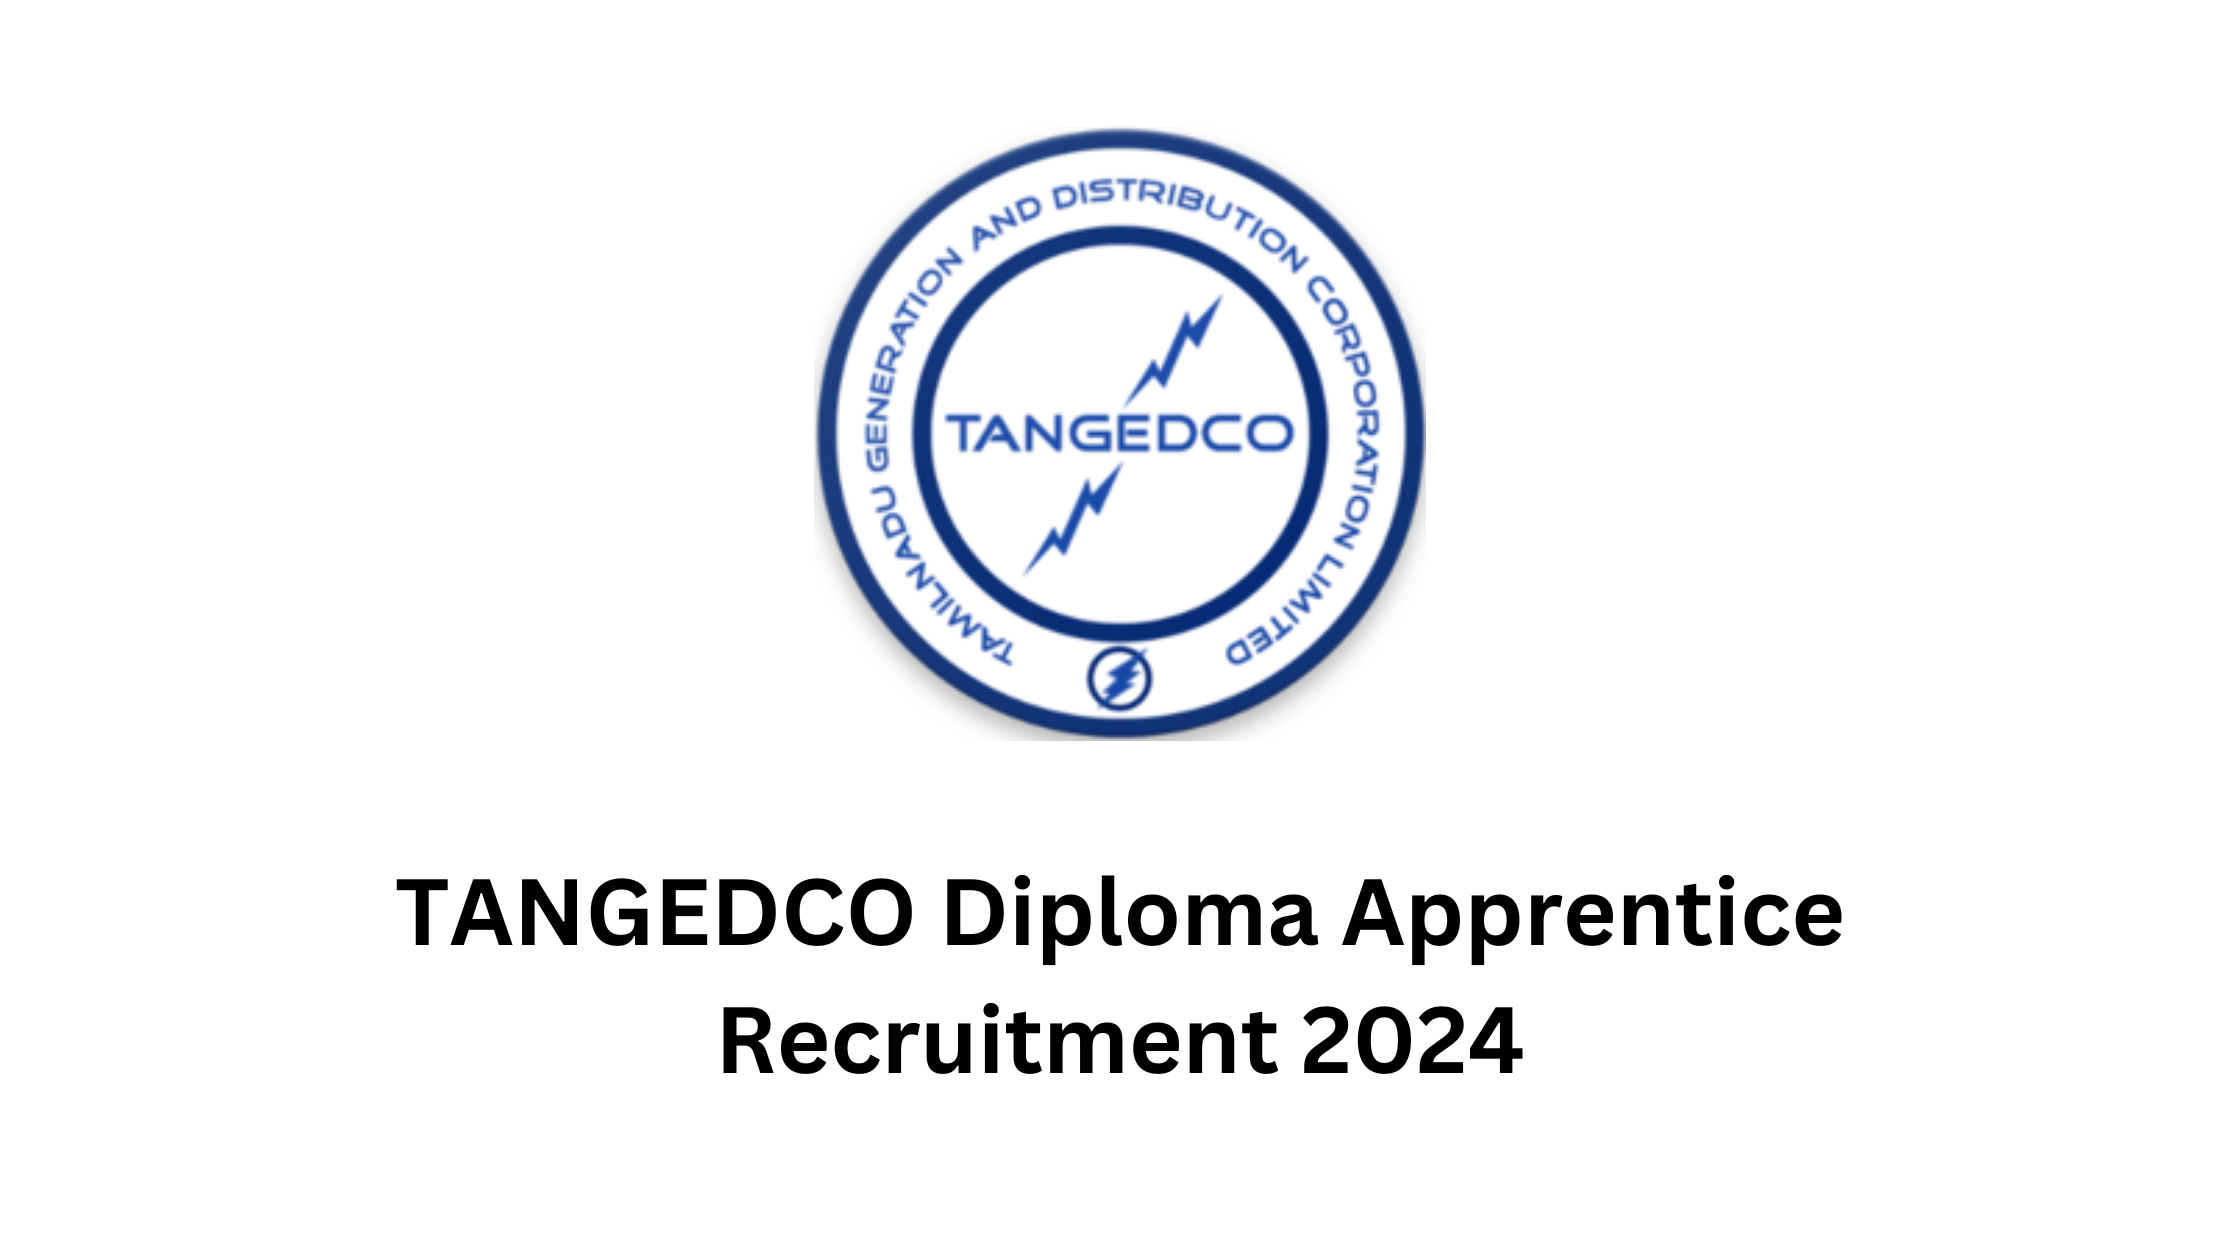 TANGEDCO Diploma Apprentice Recruitment 2024